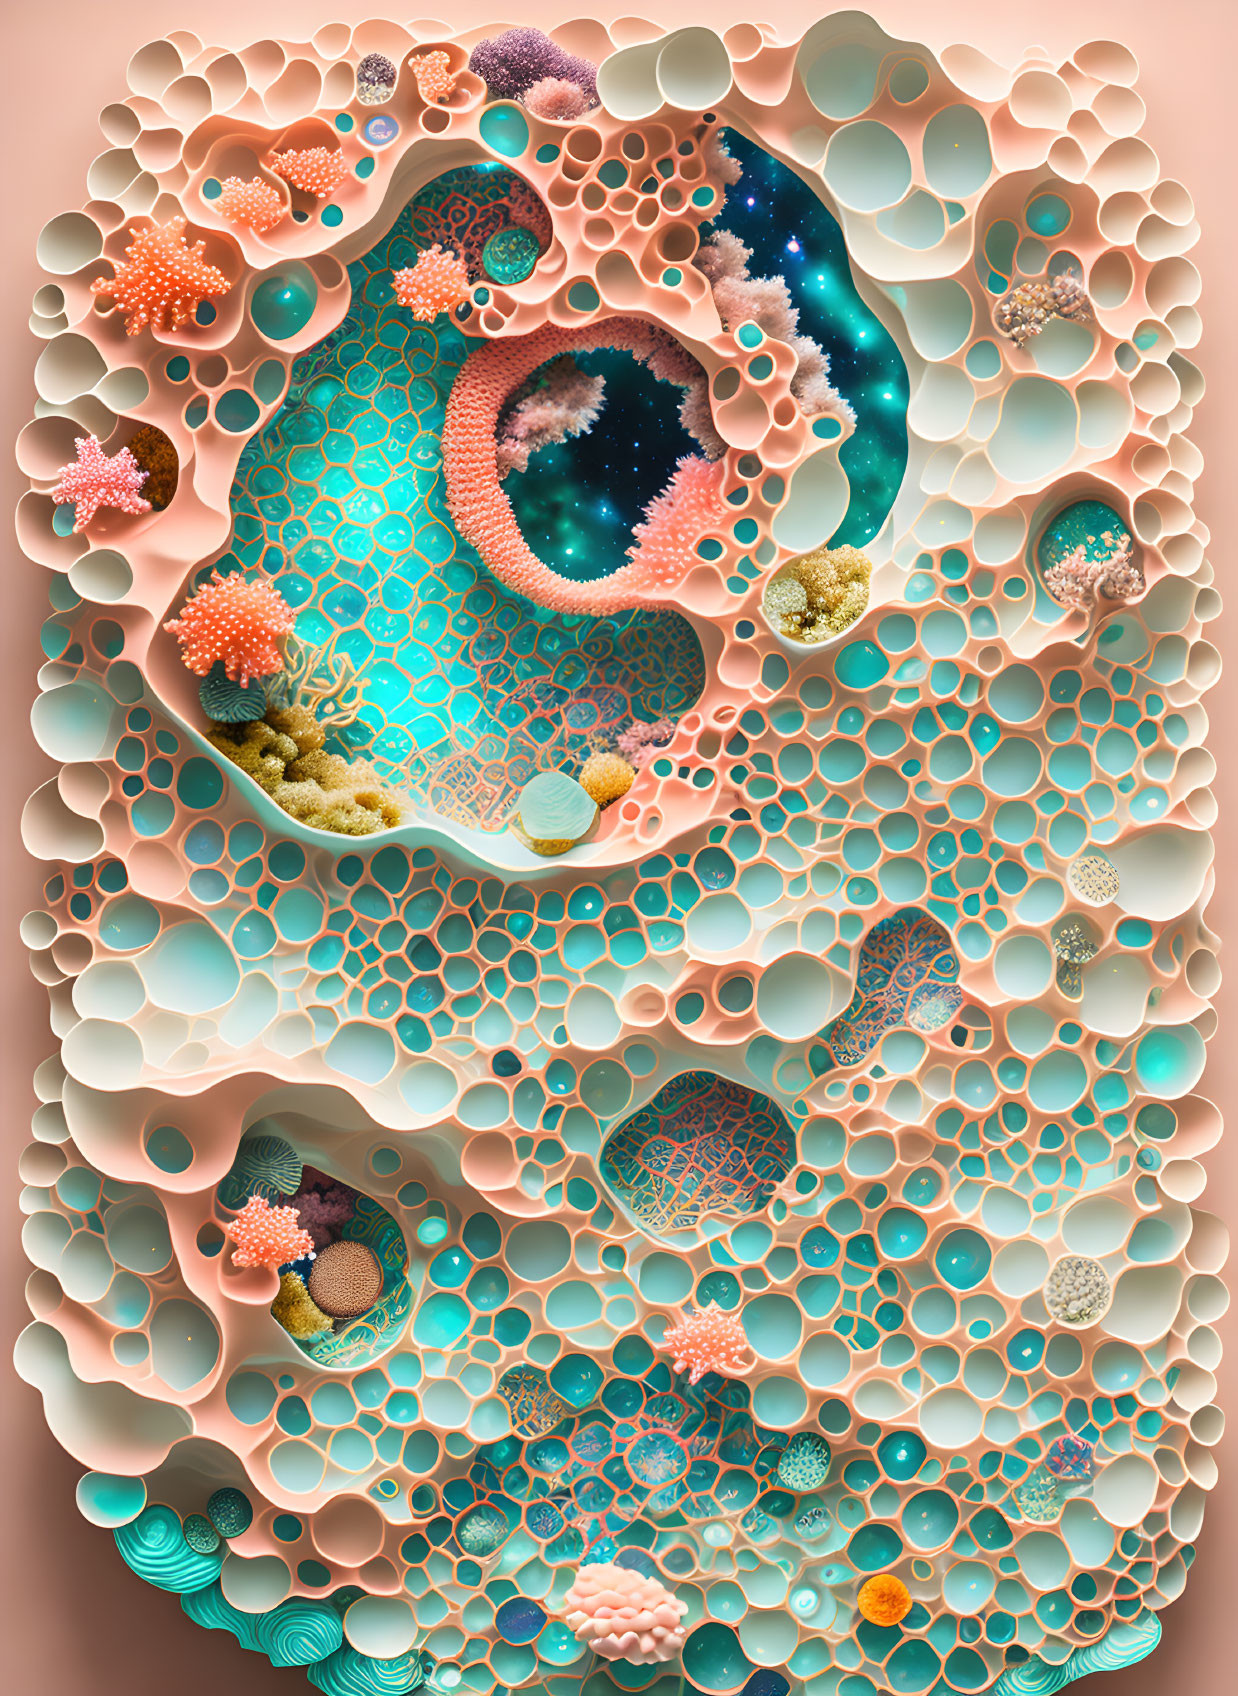 Surreal digital art: Aquatic and cosmic motifs in honeycomb structure